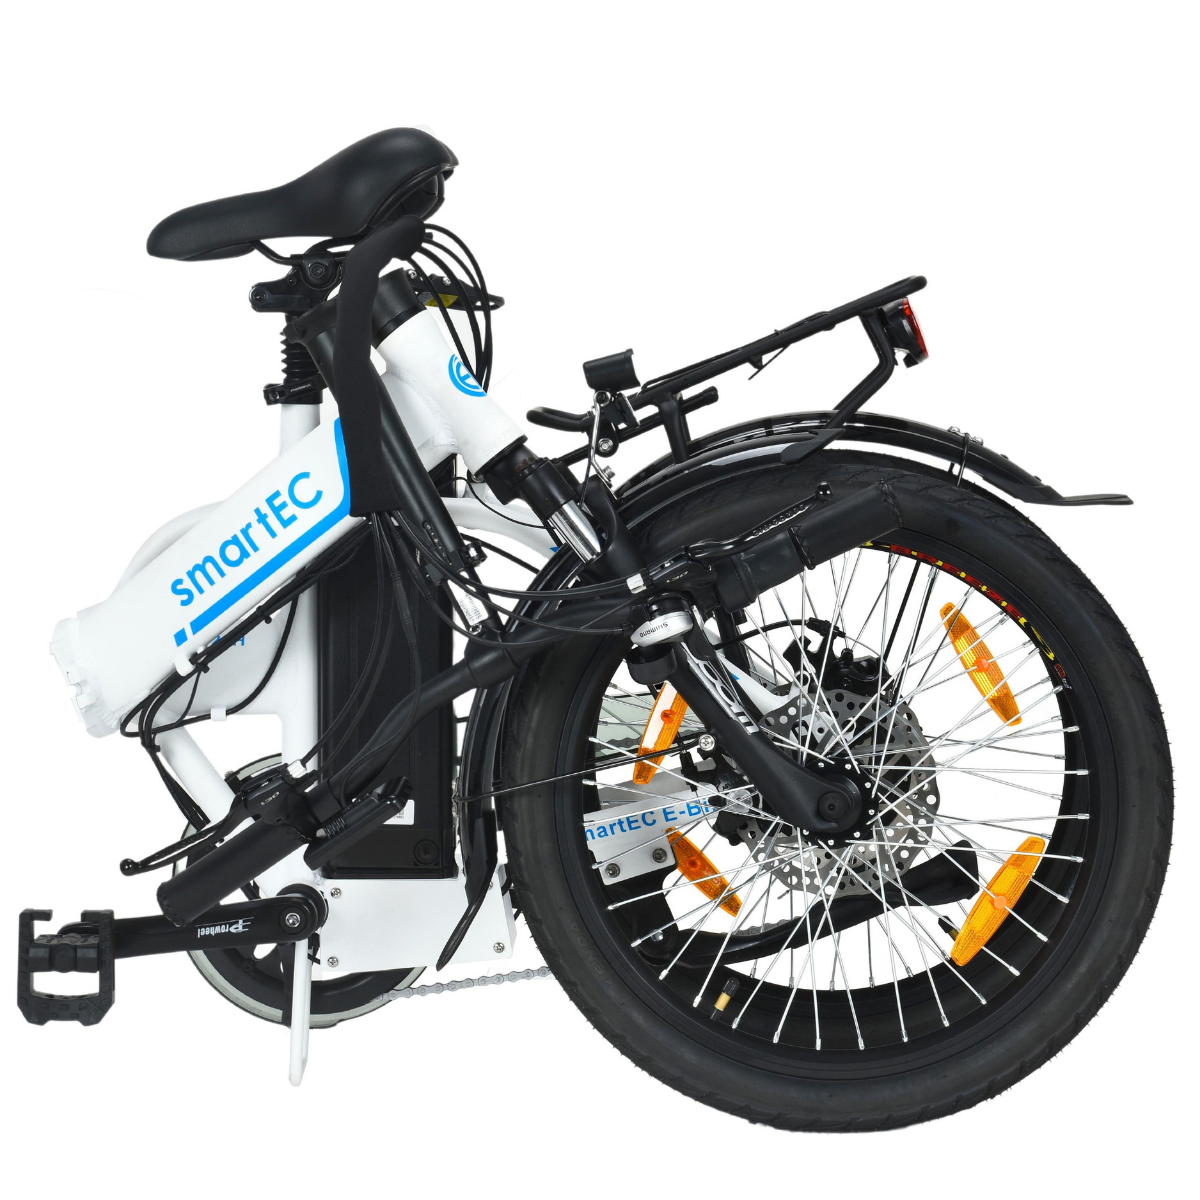 weiß) Rahmenhöhe: cm, Unisex-Rad, 20 Wh, Falt (Laufradgröße: 42 Zoll, 562 Pedelec/E-Bike Kompakt-/Faltrad Camp-20H SMARTEC